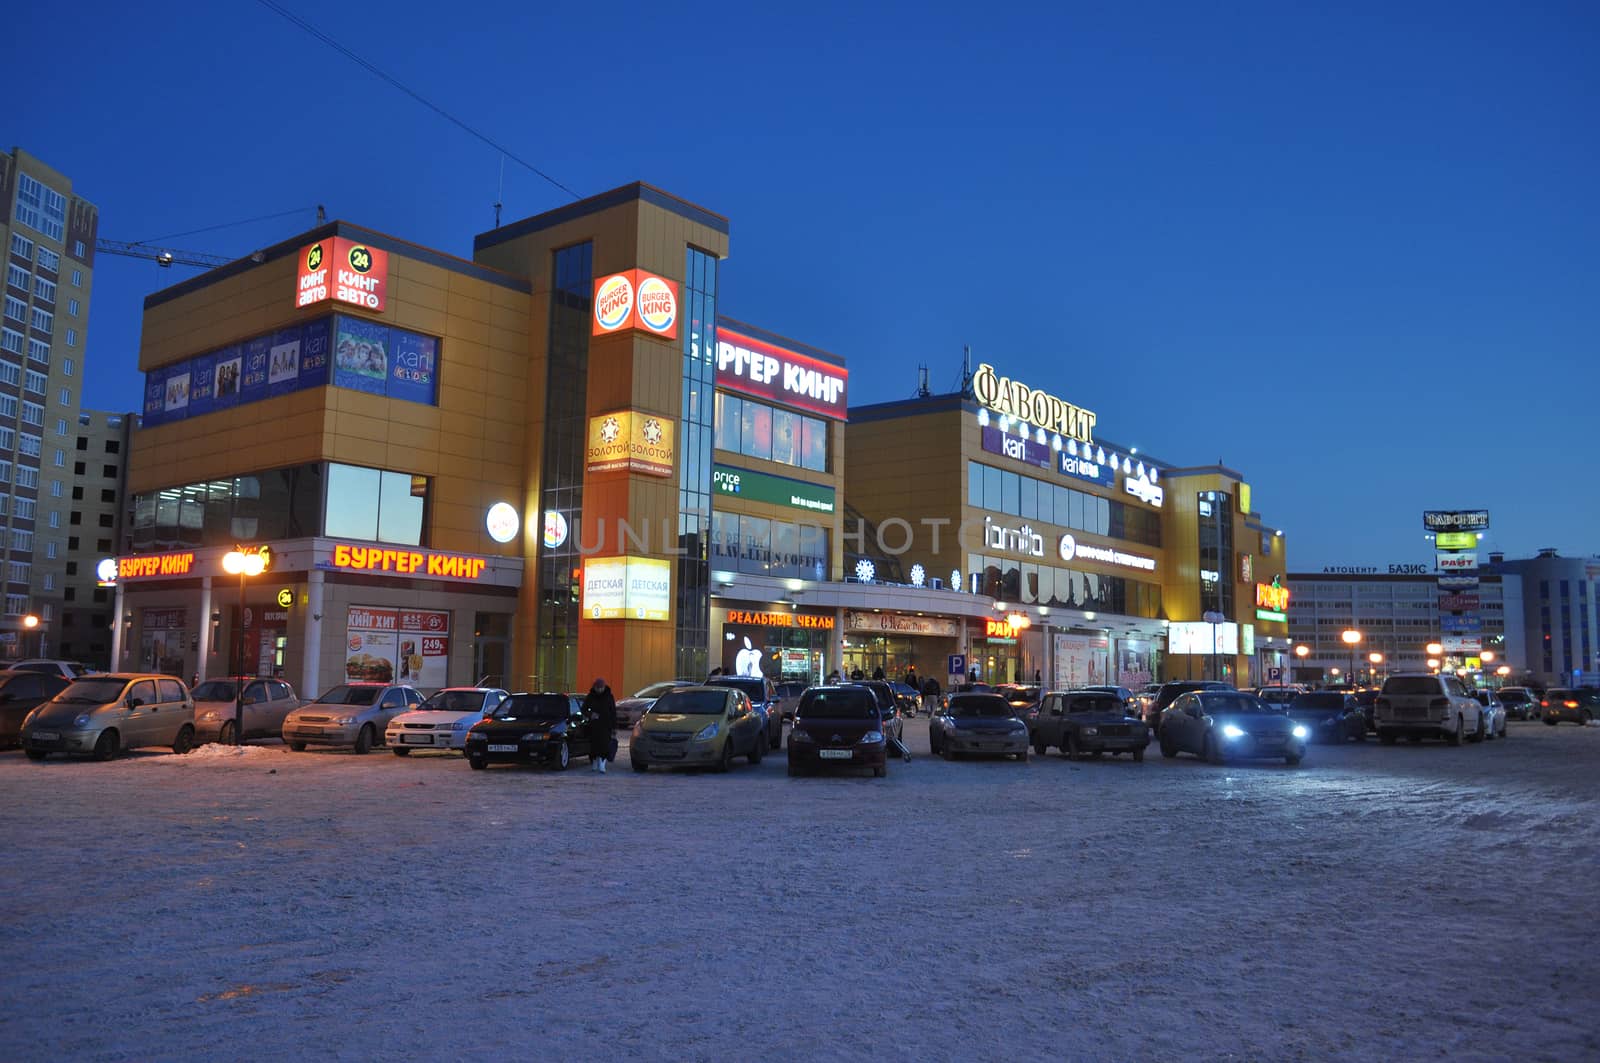 Shopping Center Favrit building. Tyumen, Russia, December, 2015 by veronka72